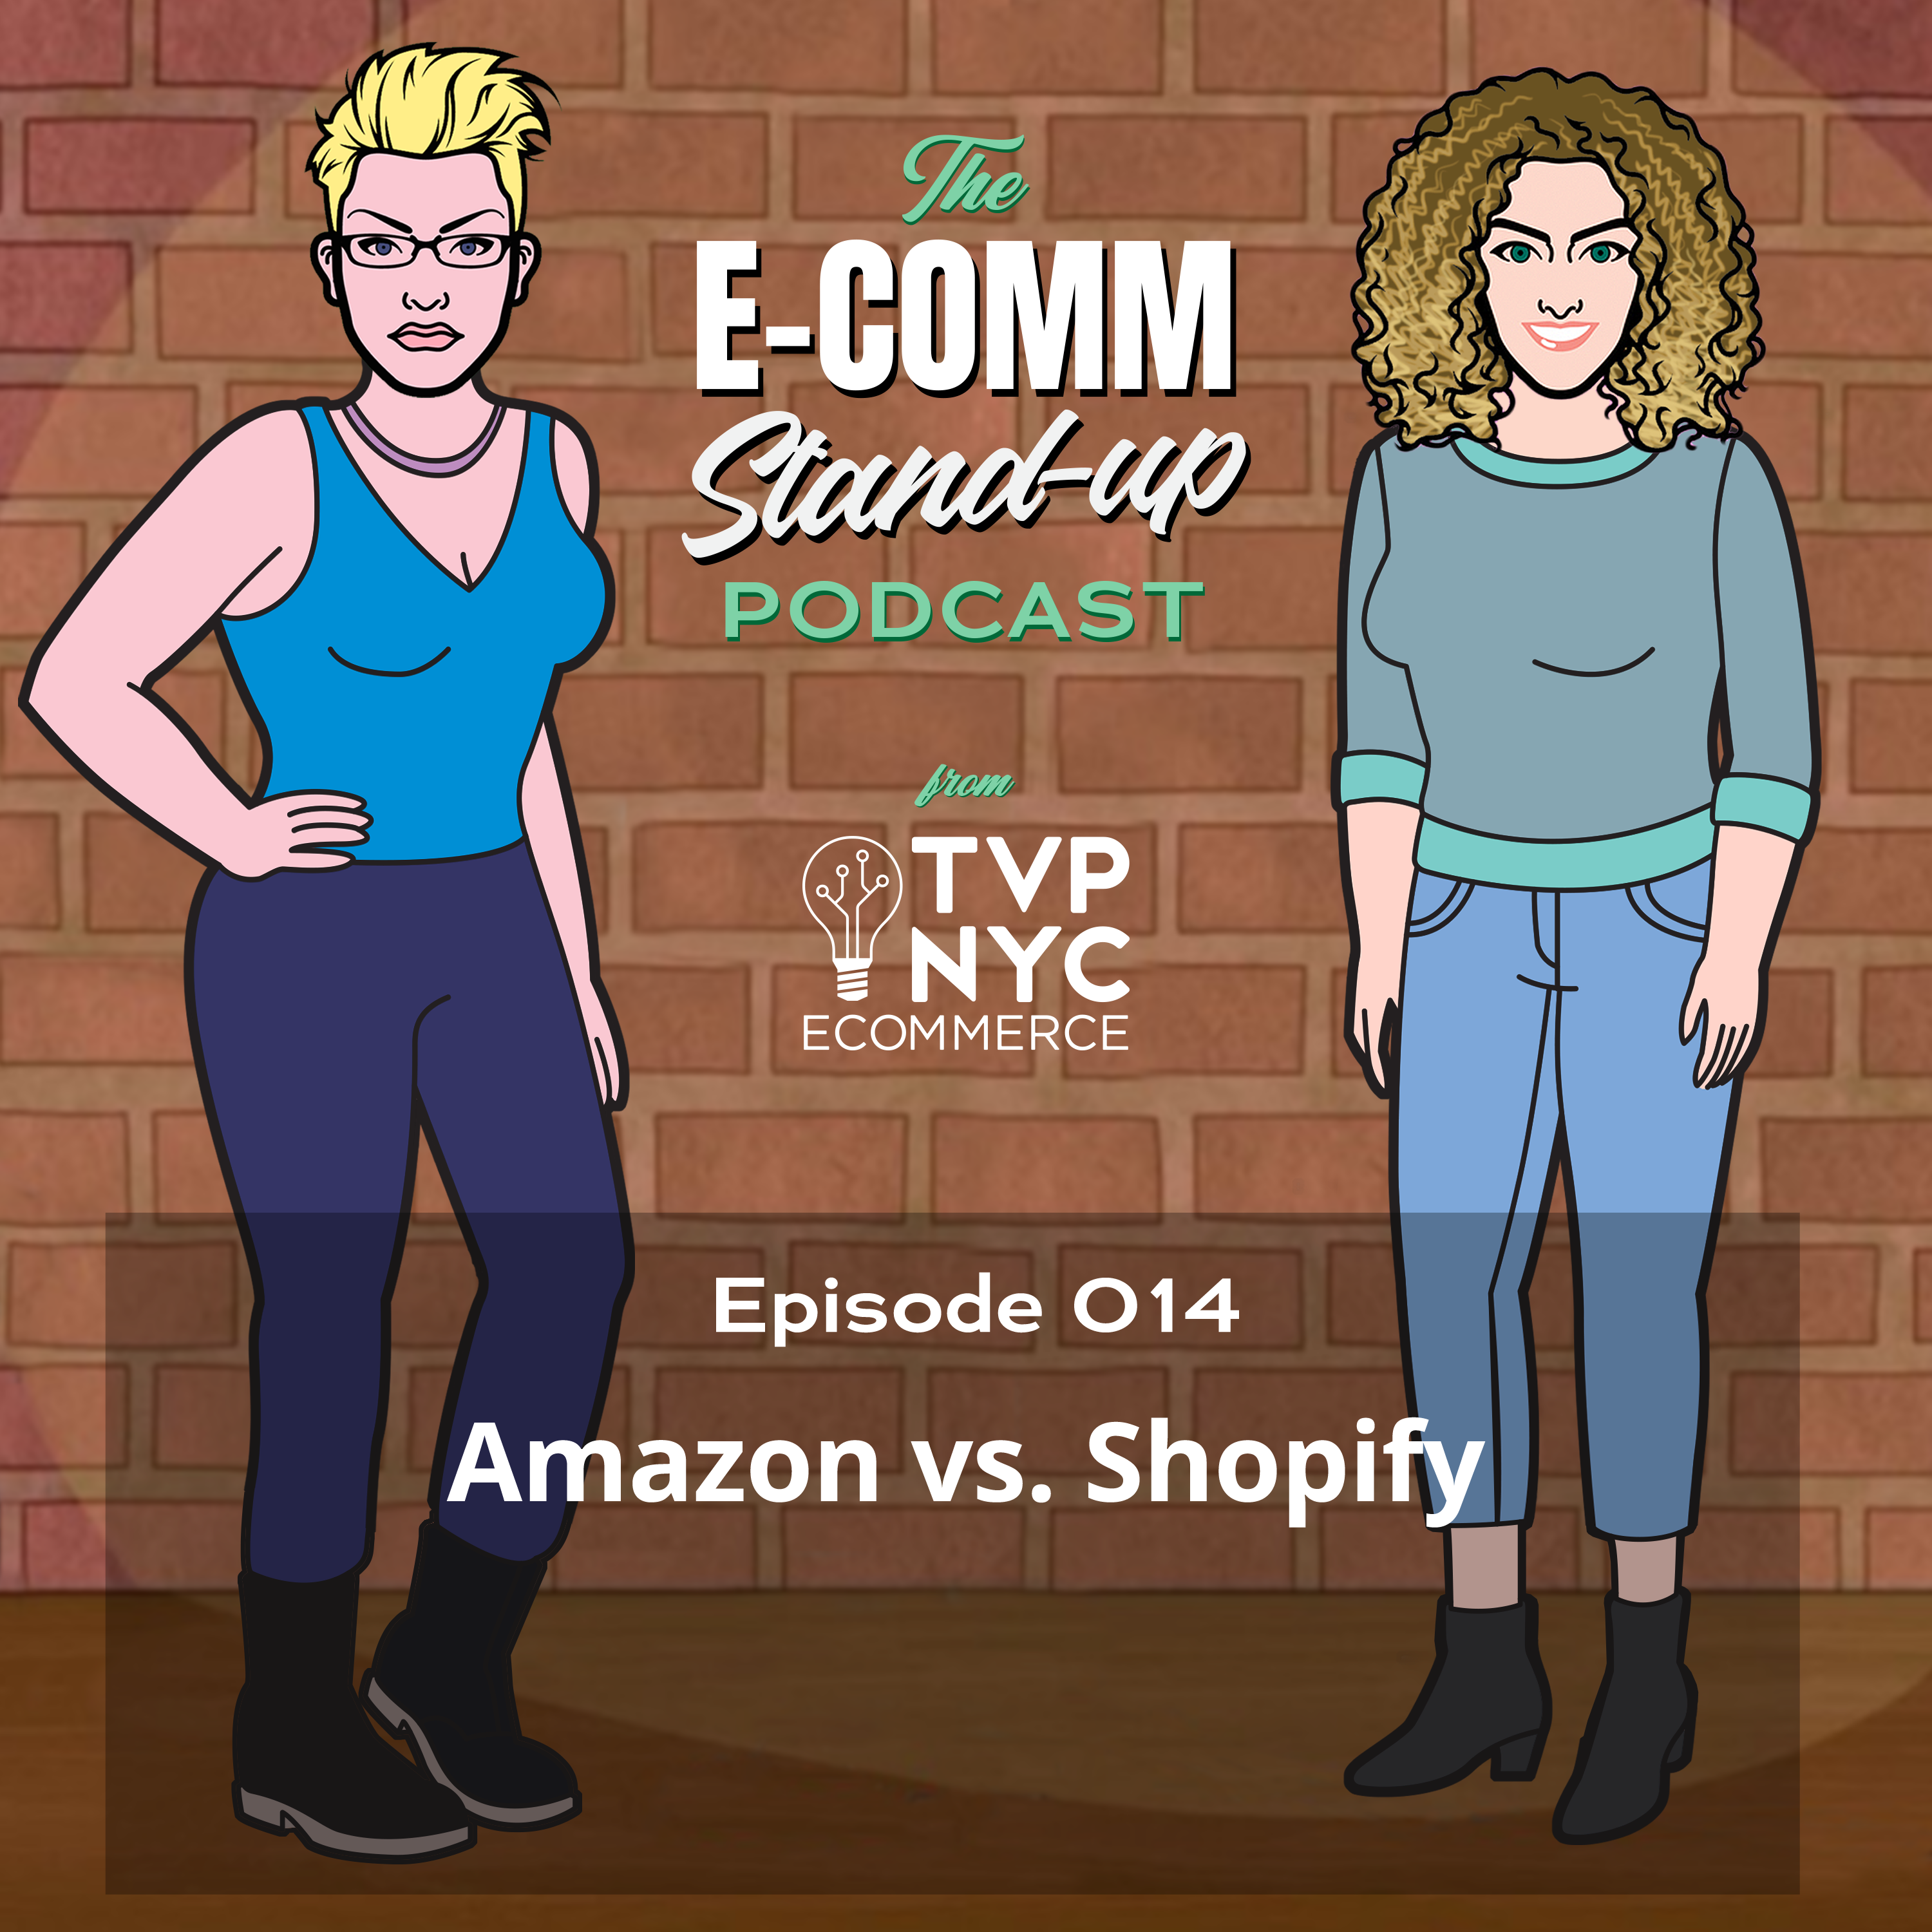 [Podcast] Amazon vs Shopify